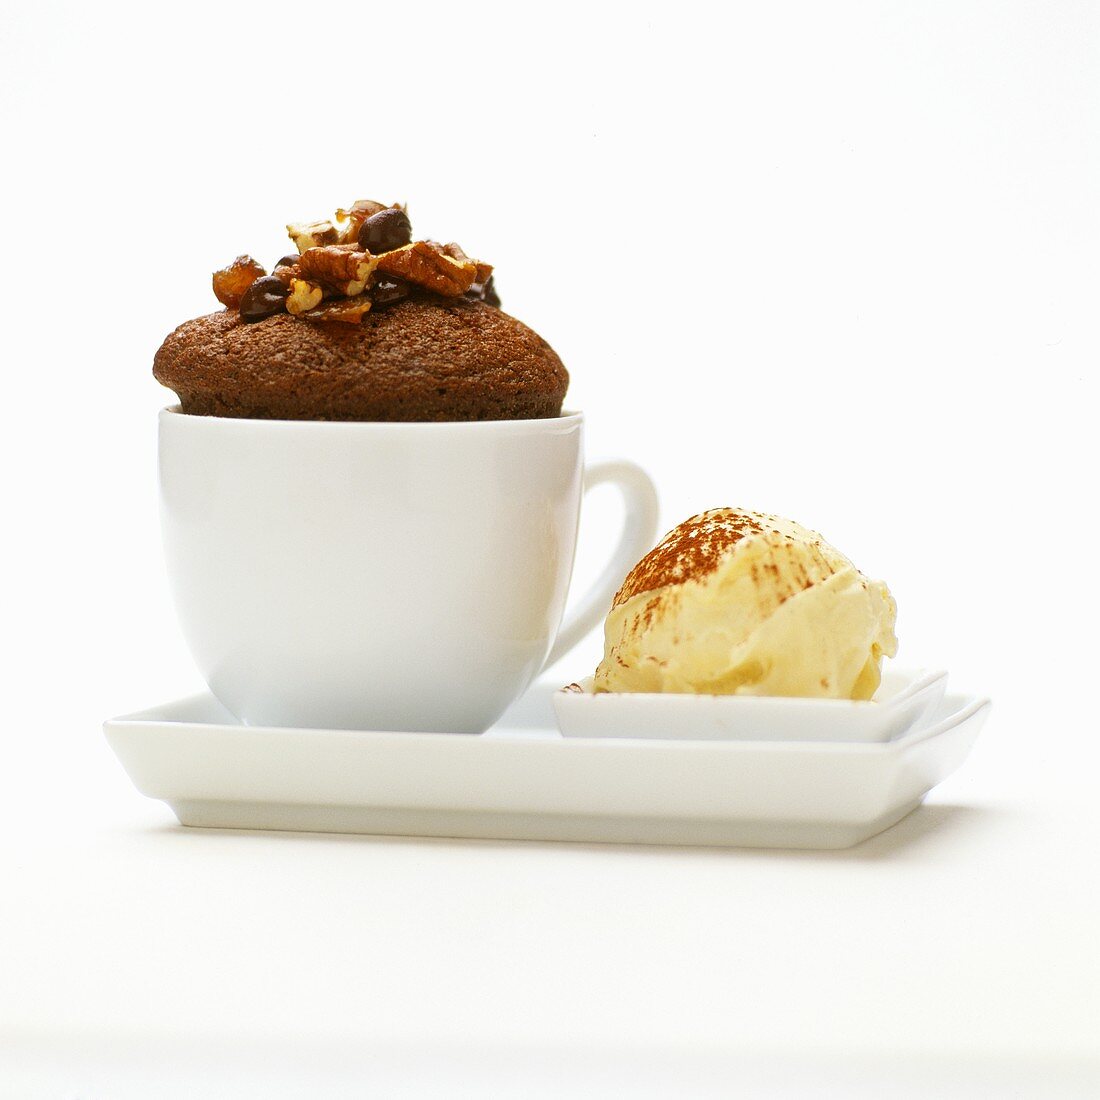 Chocolate pecan muffin with dates and vanilla ice cream